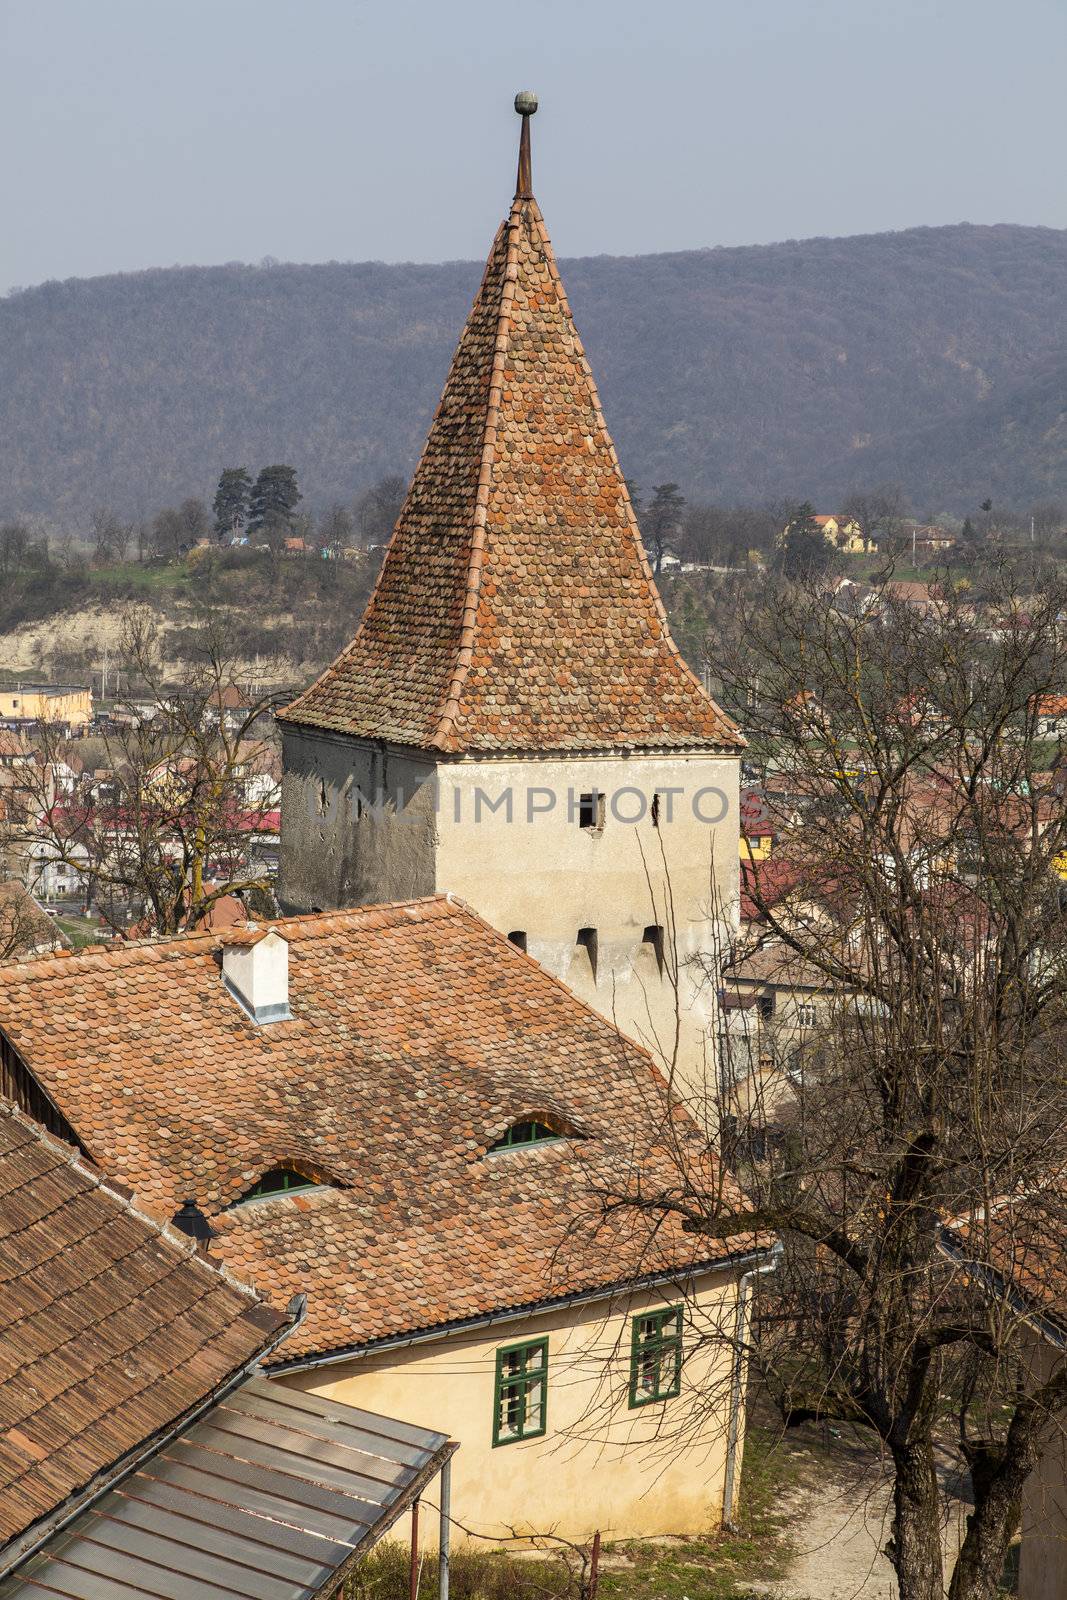 Te Furriers' Tower in the Sighisoara citadel from Transylvania,Romania,Europe.